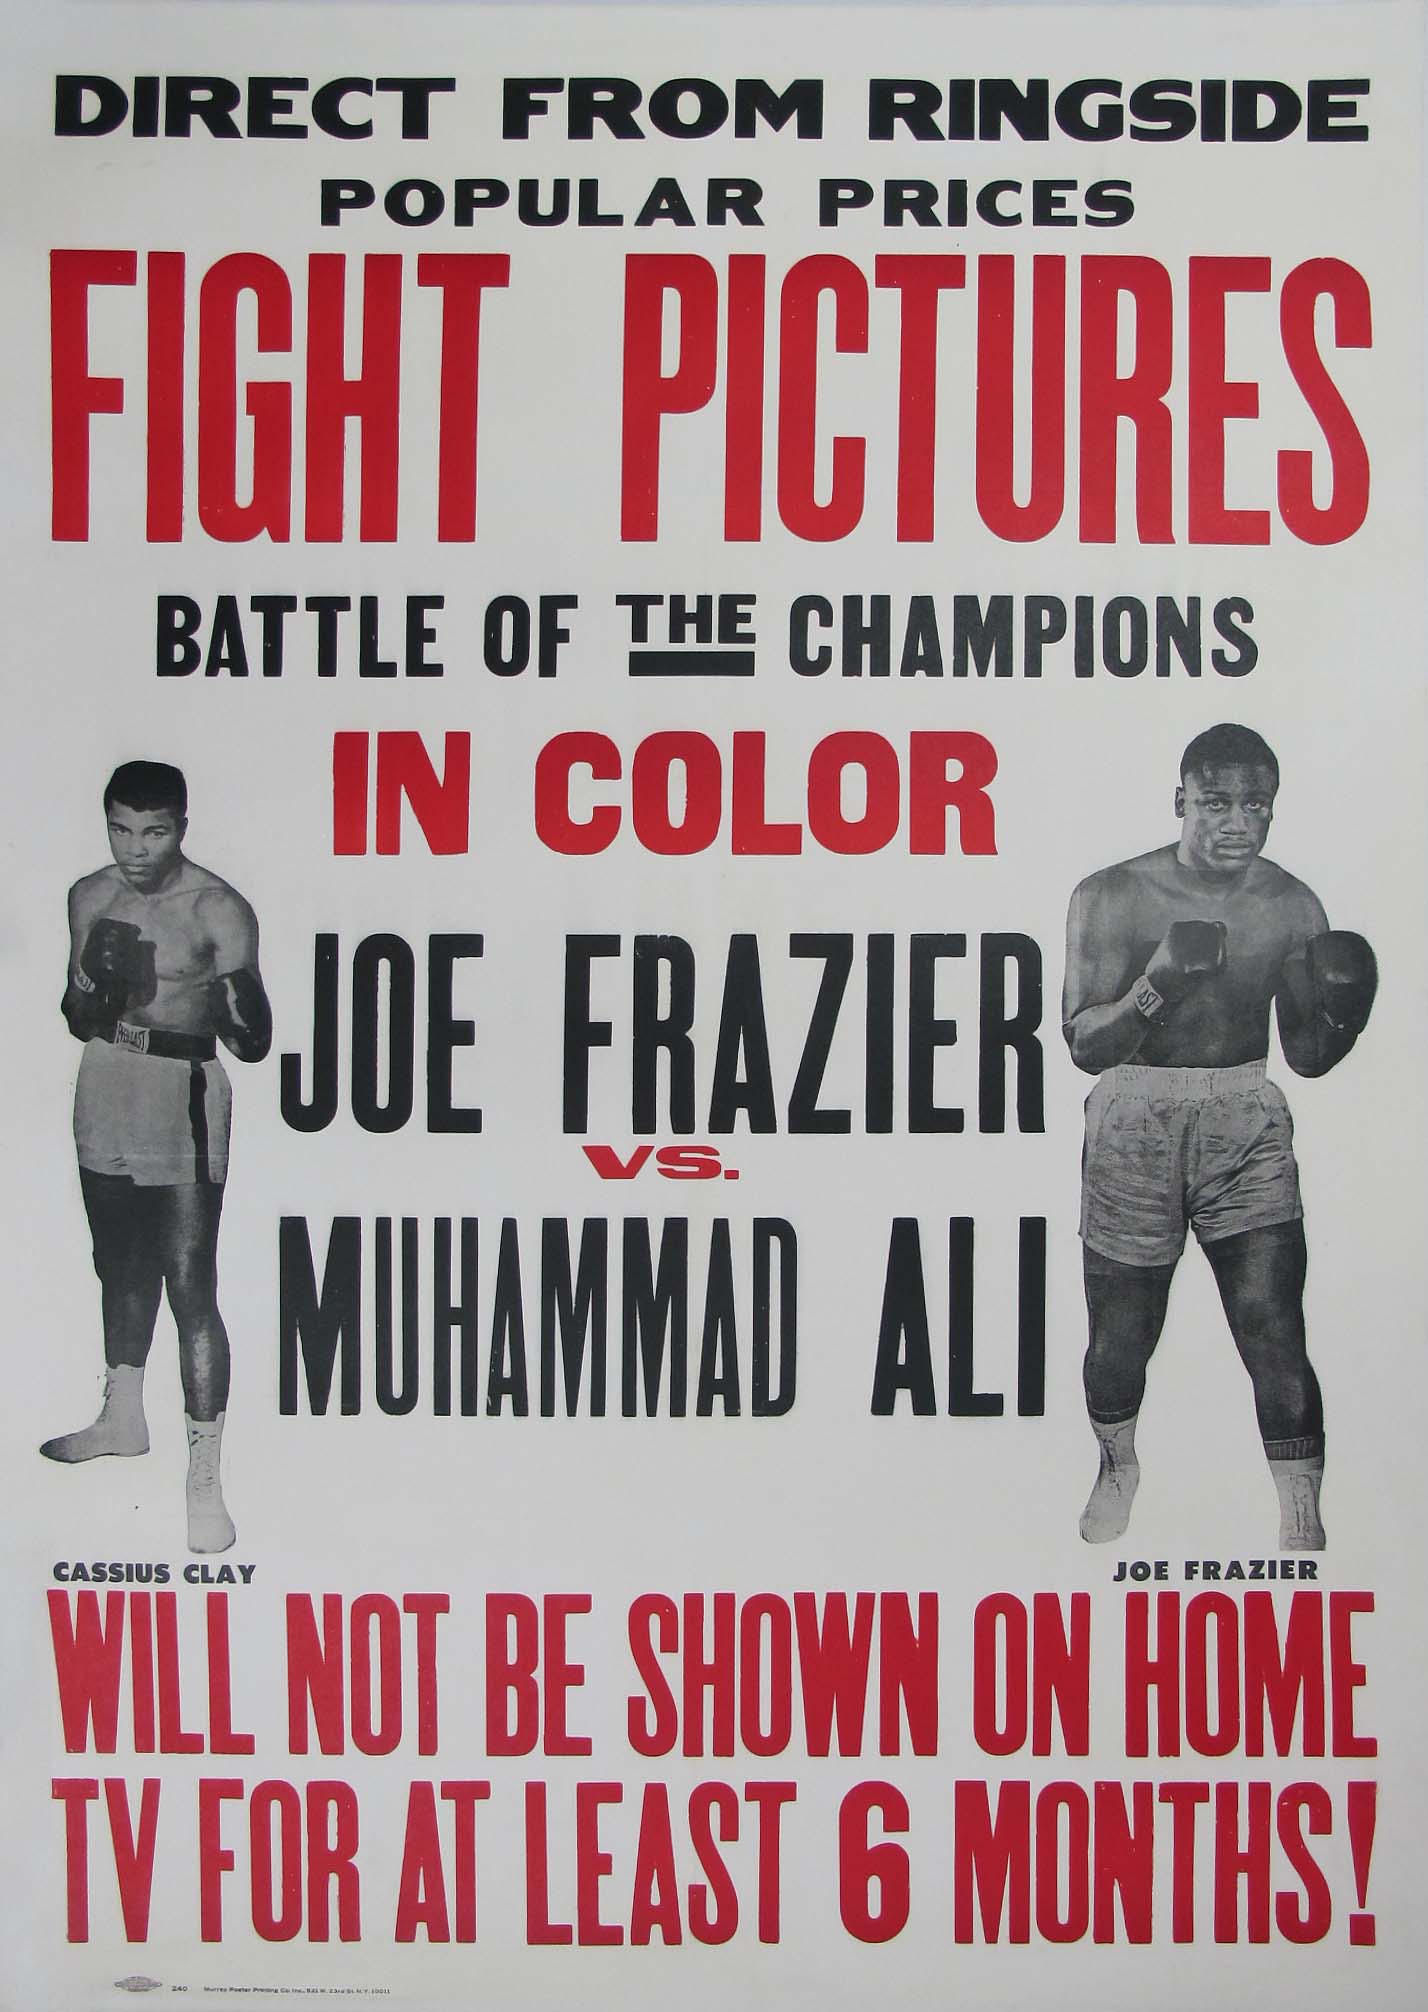  Joe Frazier Vs. Muhammad Ali